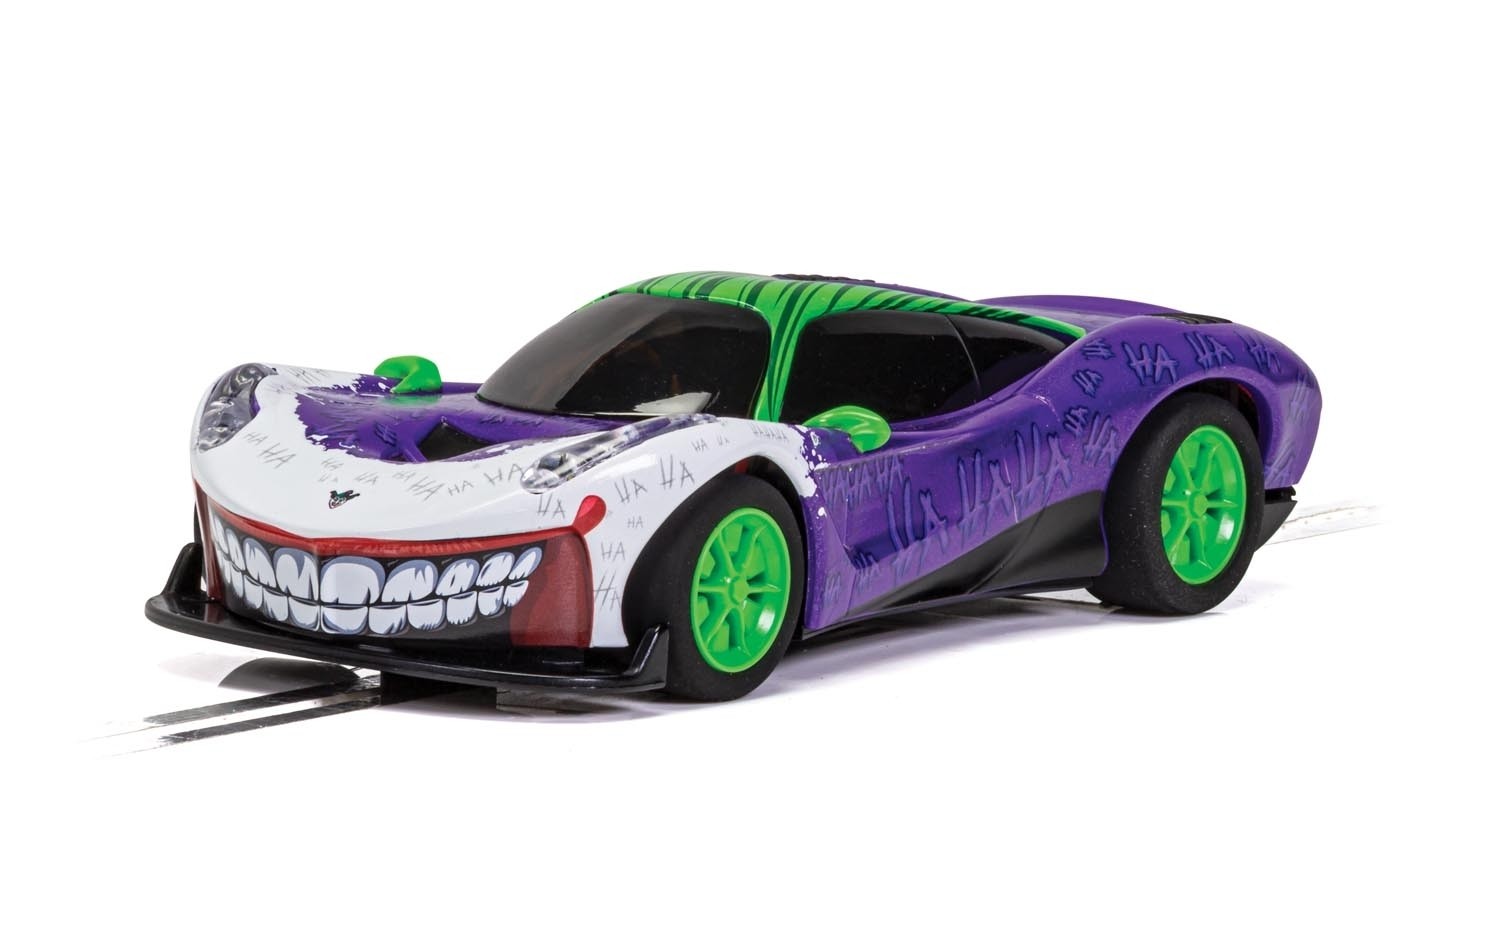 C4142 Joker Tribute Car 1:32 scale